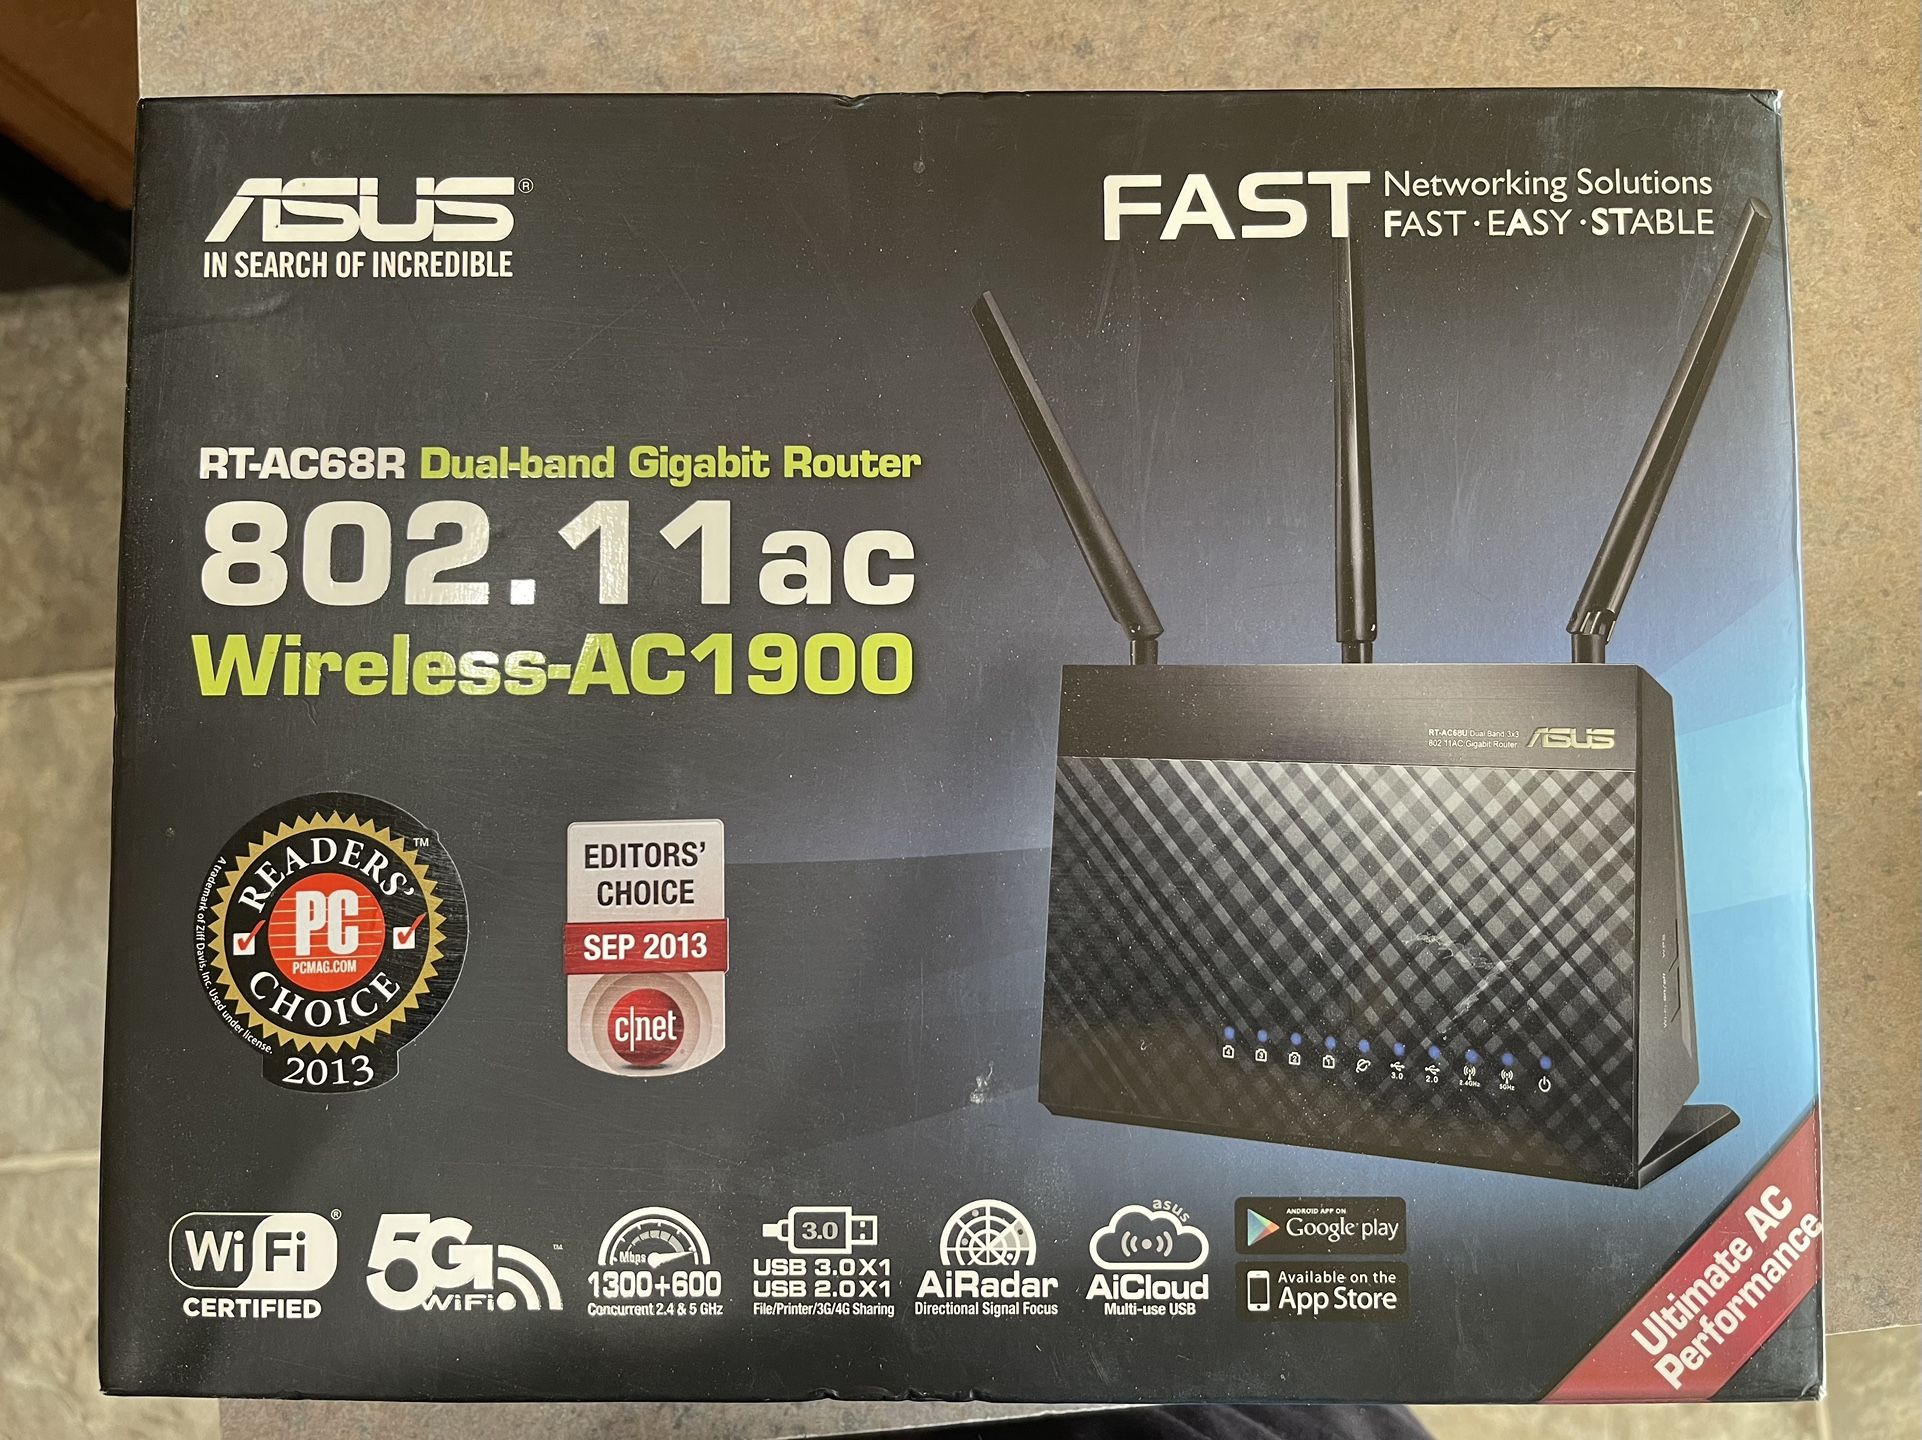 ASUS RT-AC68R Dual-band Gigabit Router